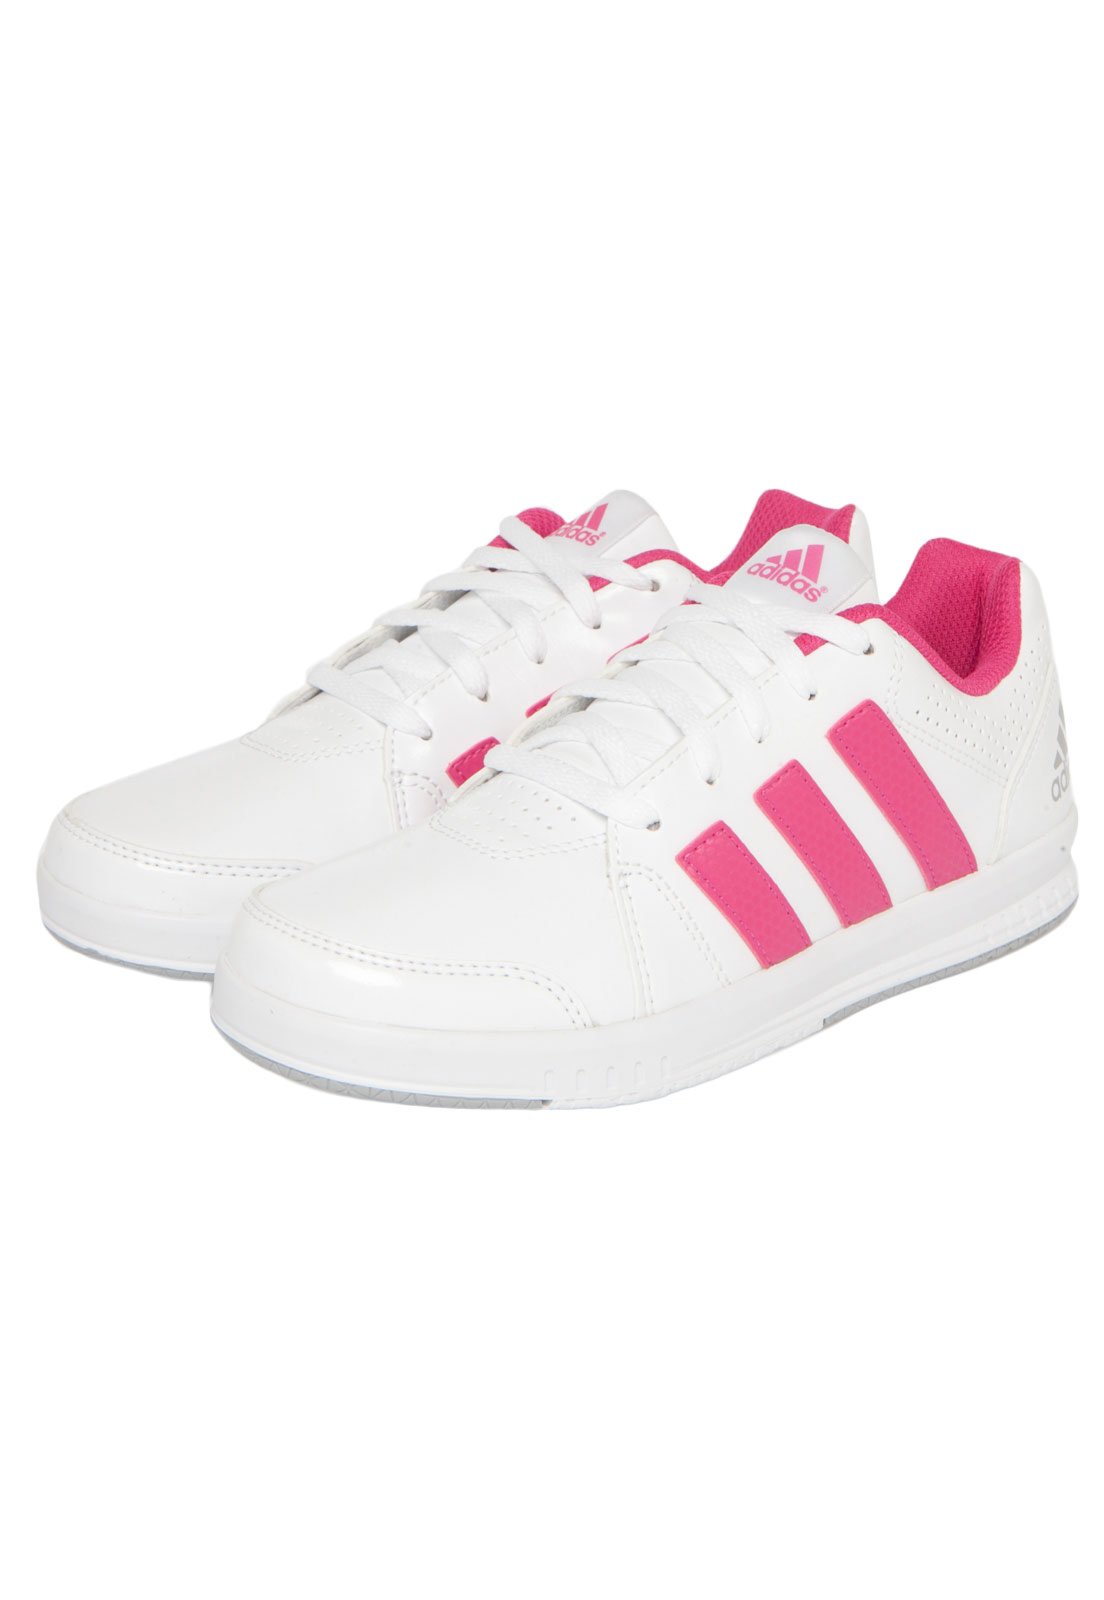 tenis adidas branco e rosa feminino